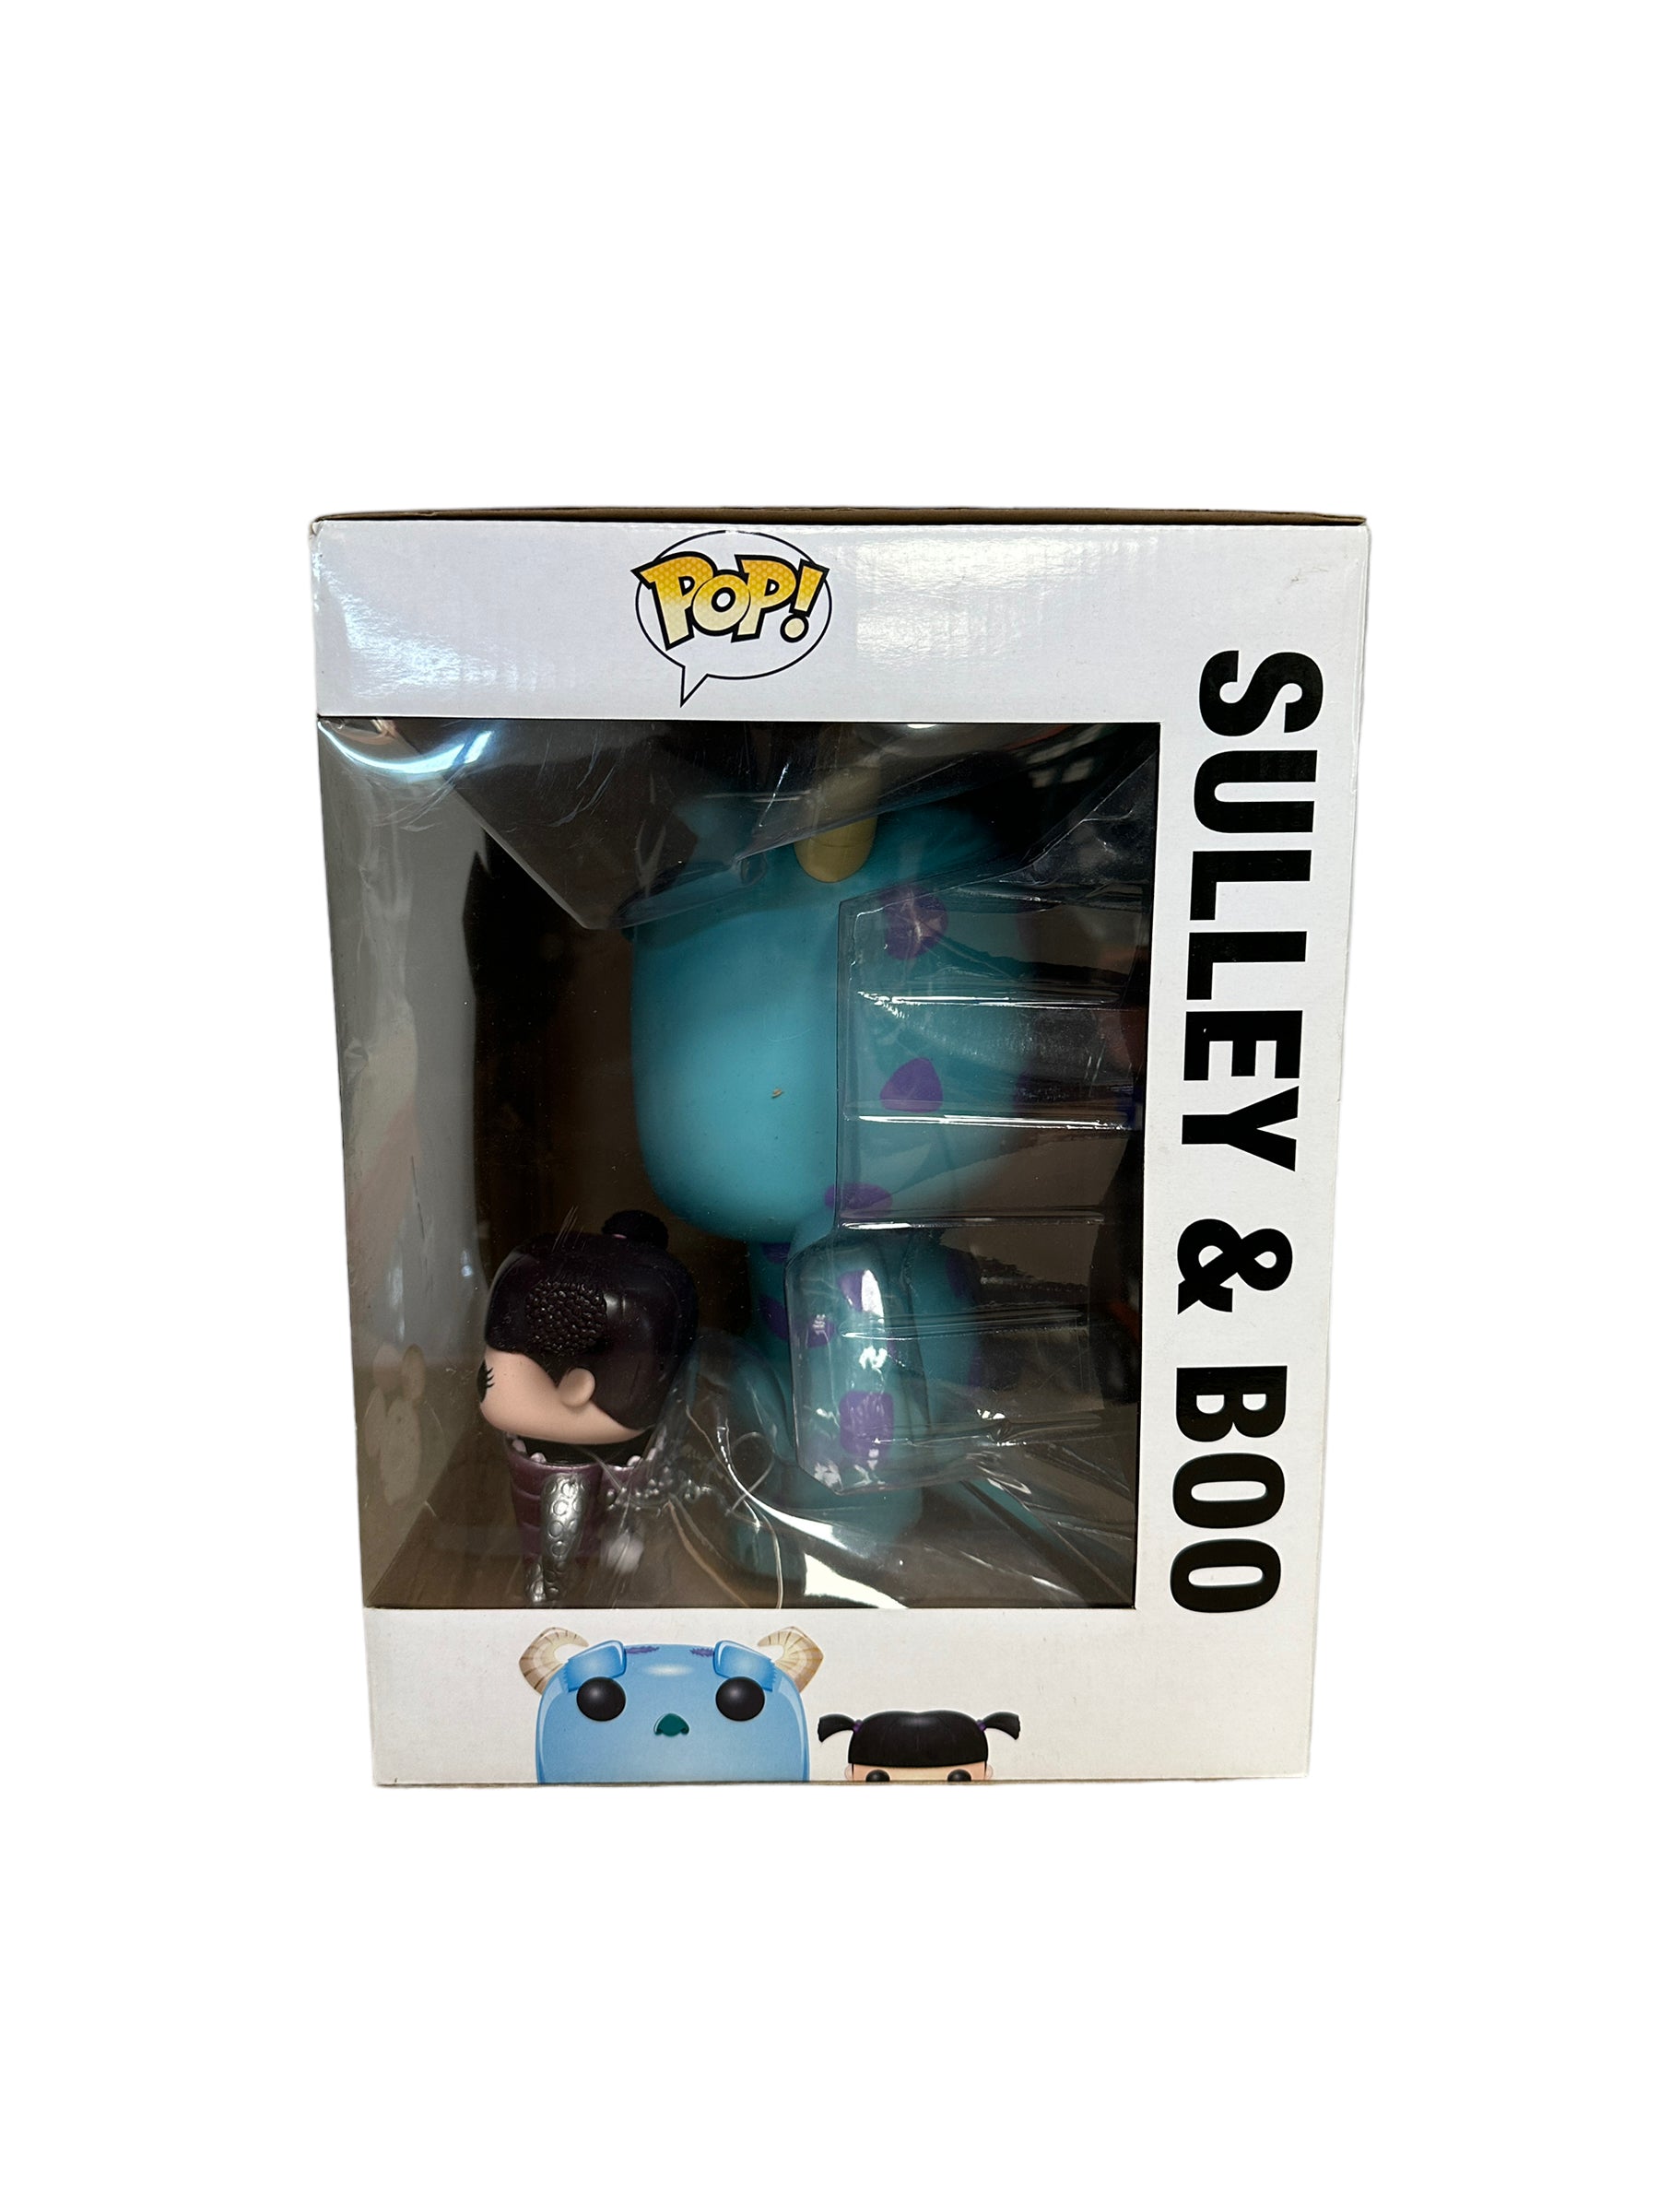 Sulley & Boo (Metallic) 9" Funko Pop! - Disney - SDCC Disney Store 2012 Exclusive LE480 Pcs - Condition 8/10